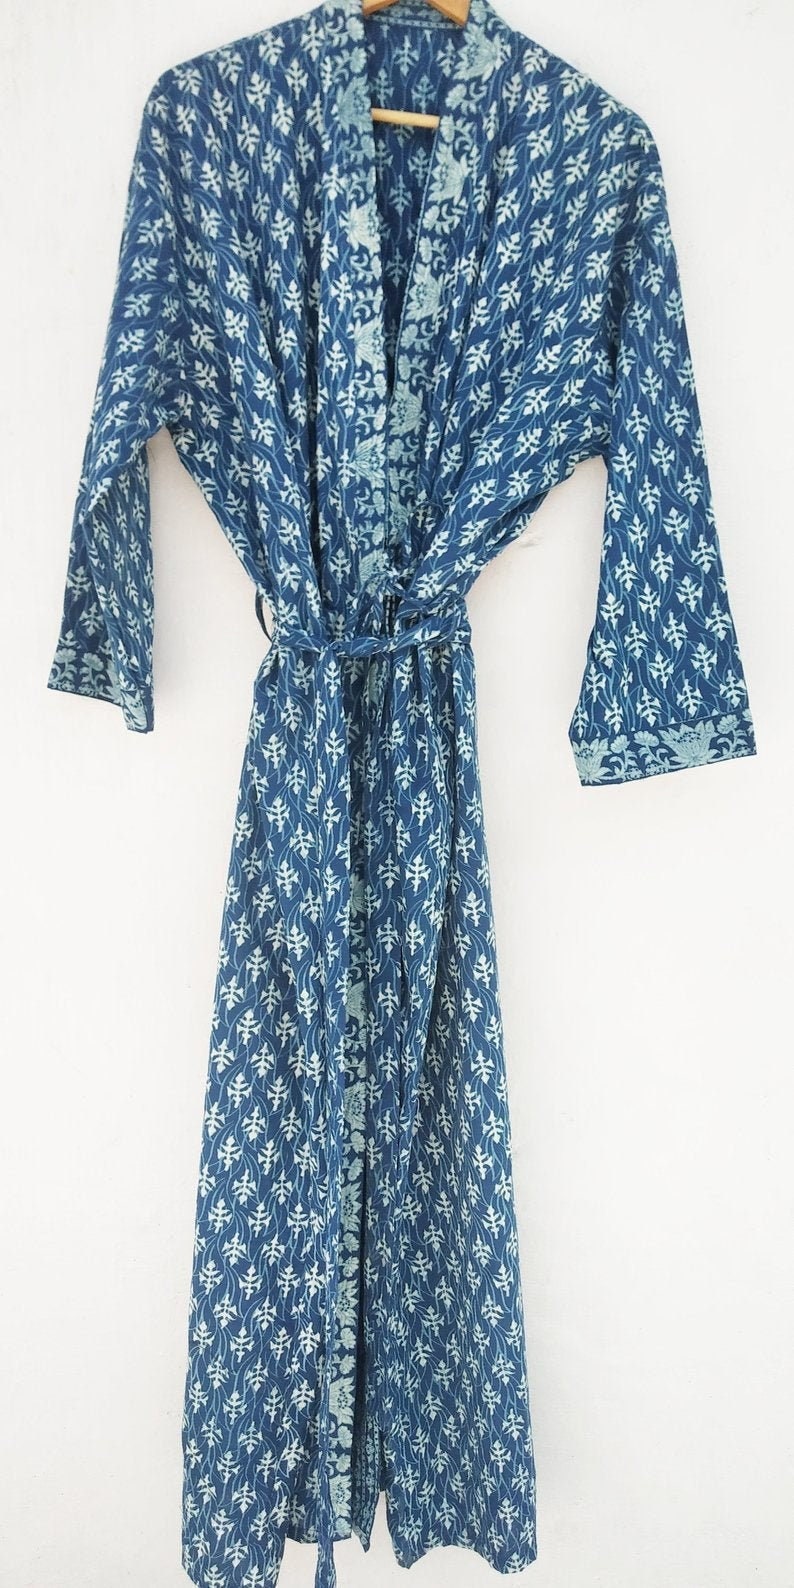 Indigo Cotton Kimono Robes for Women Indian Dressing Gown Unisex Blockprint Beach Cover ups Bridesmaid Gifts image 3